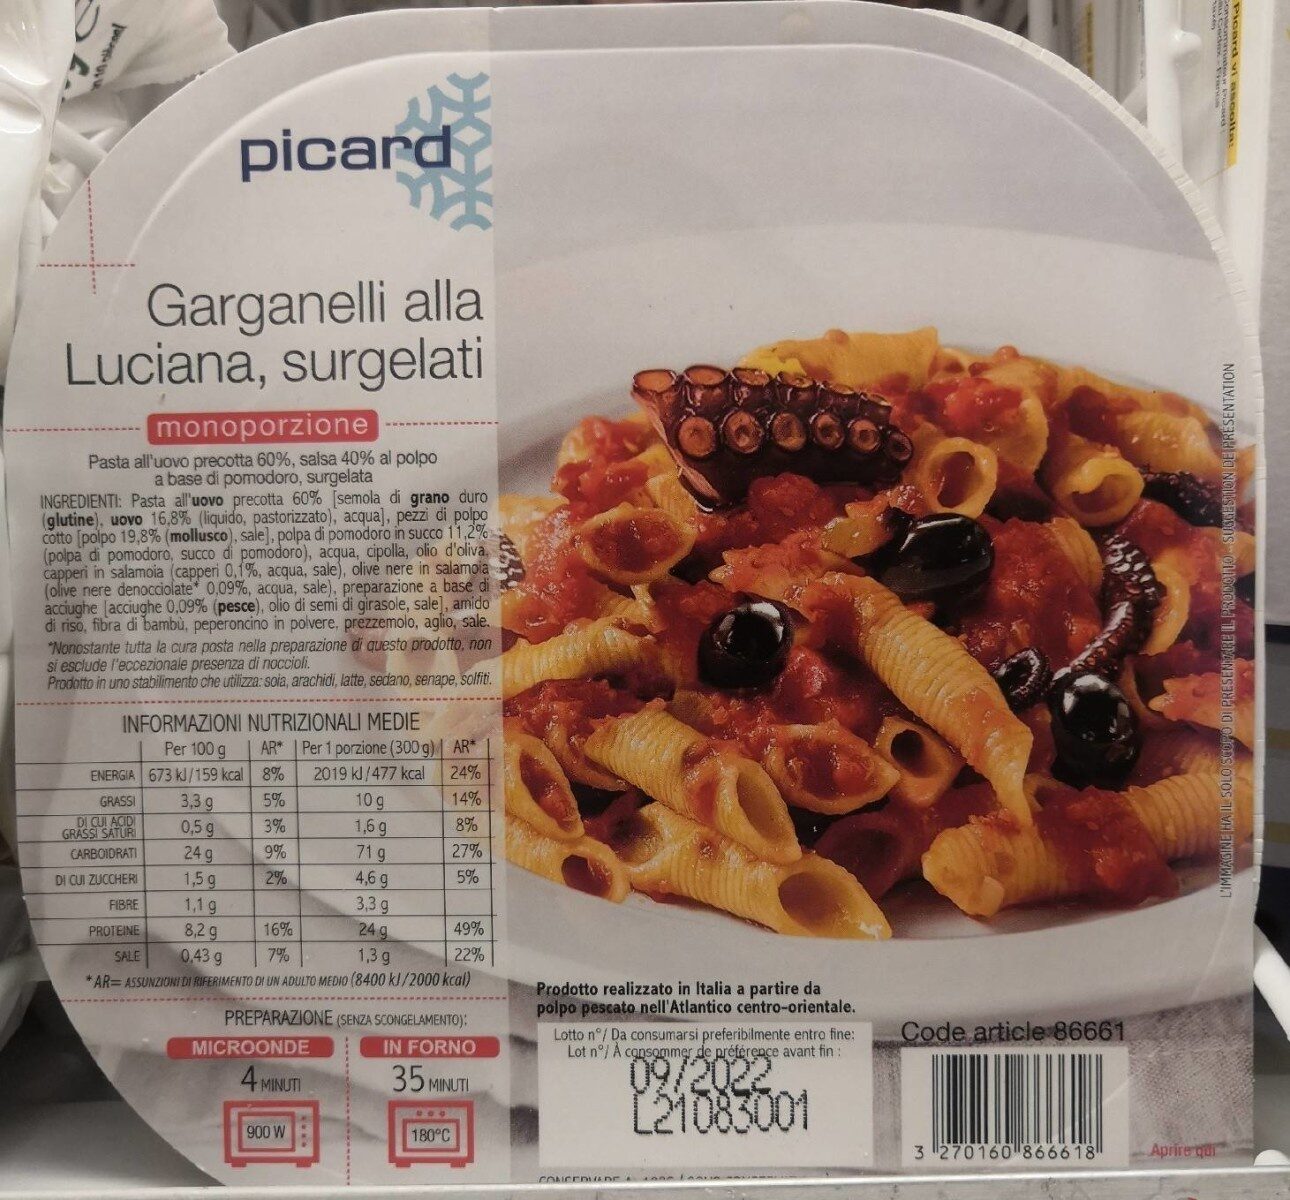 Garganelli alla Luciana, surgelati - Product - fr